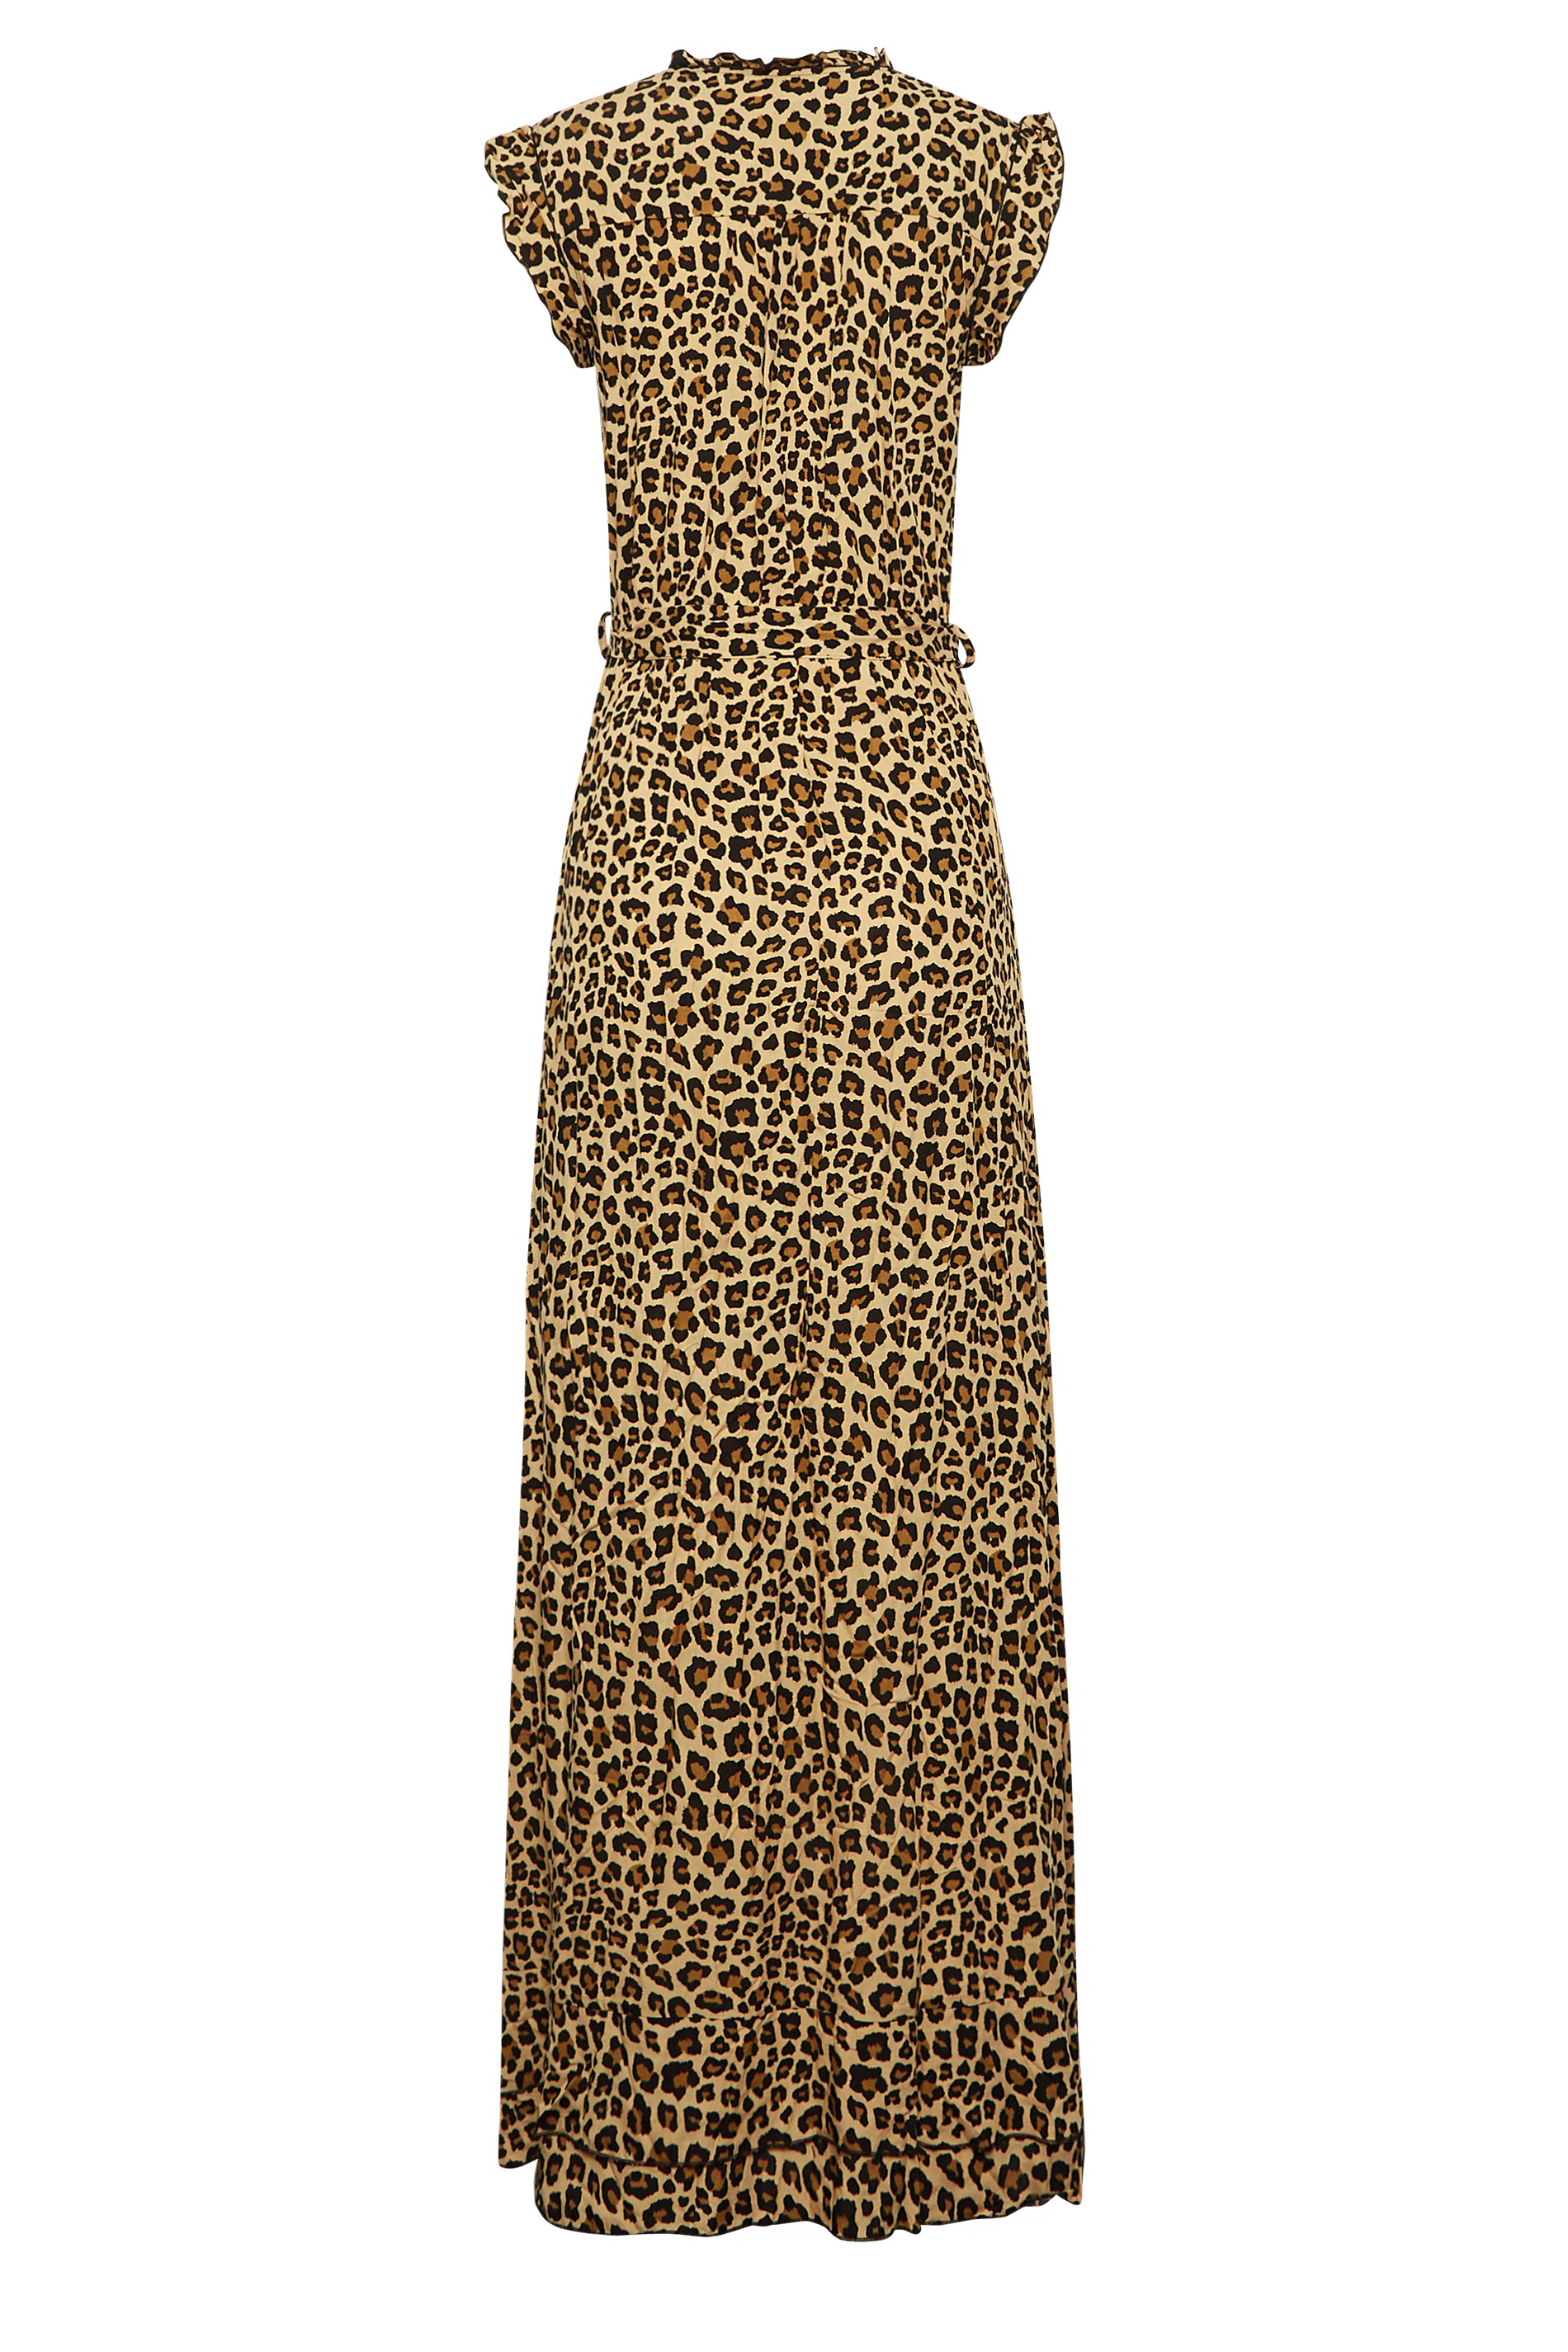 LTS Tall Women's Brown Animal Print Frill Sleeve Maxi Dress | Long Tall Sally 3